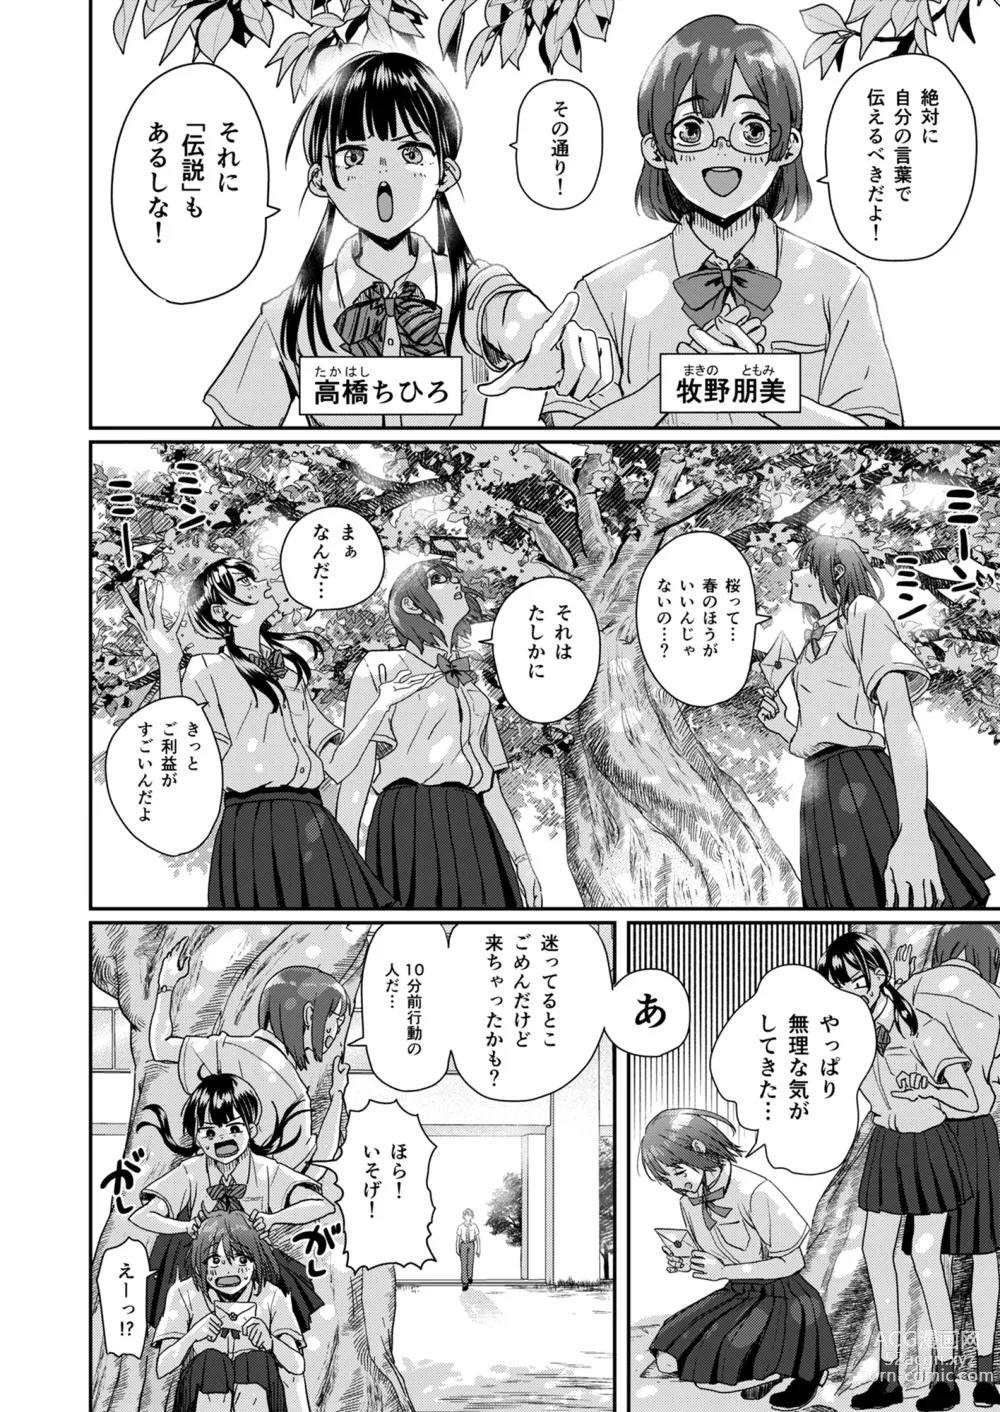 Page 9 of doujinshi Zenra Kokuhaku.